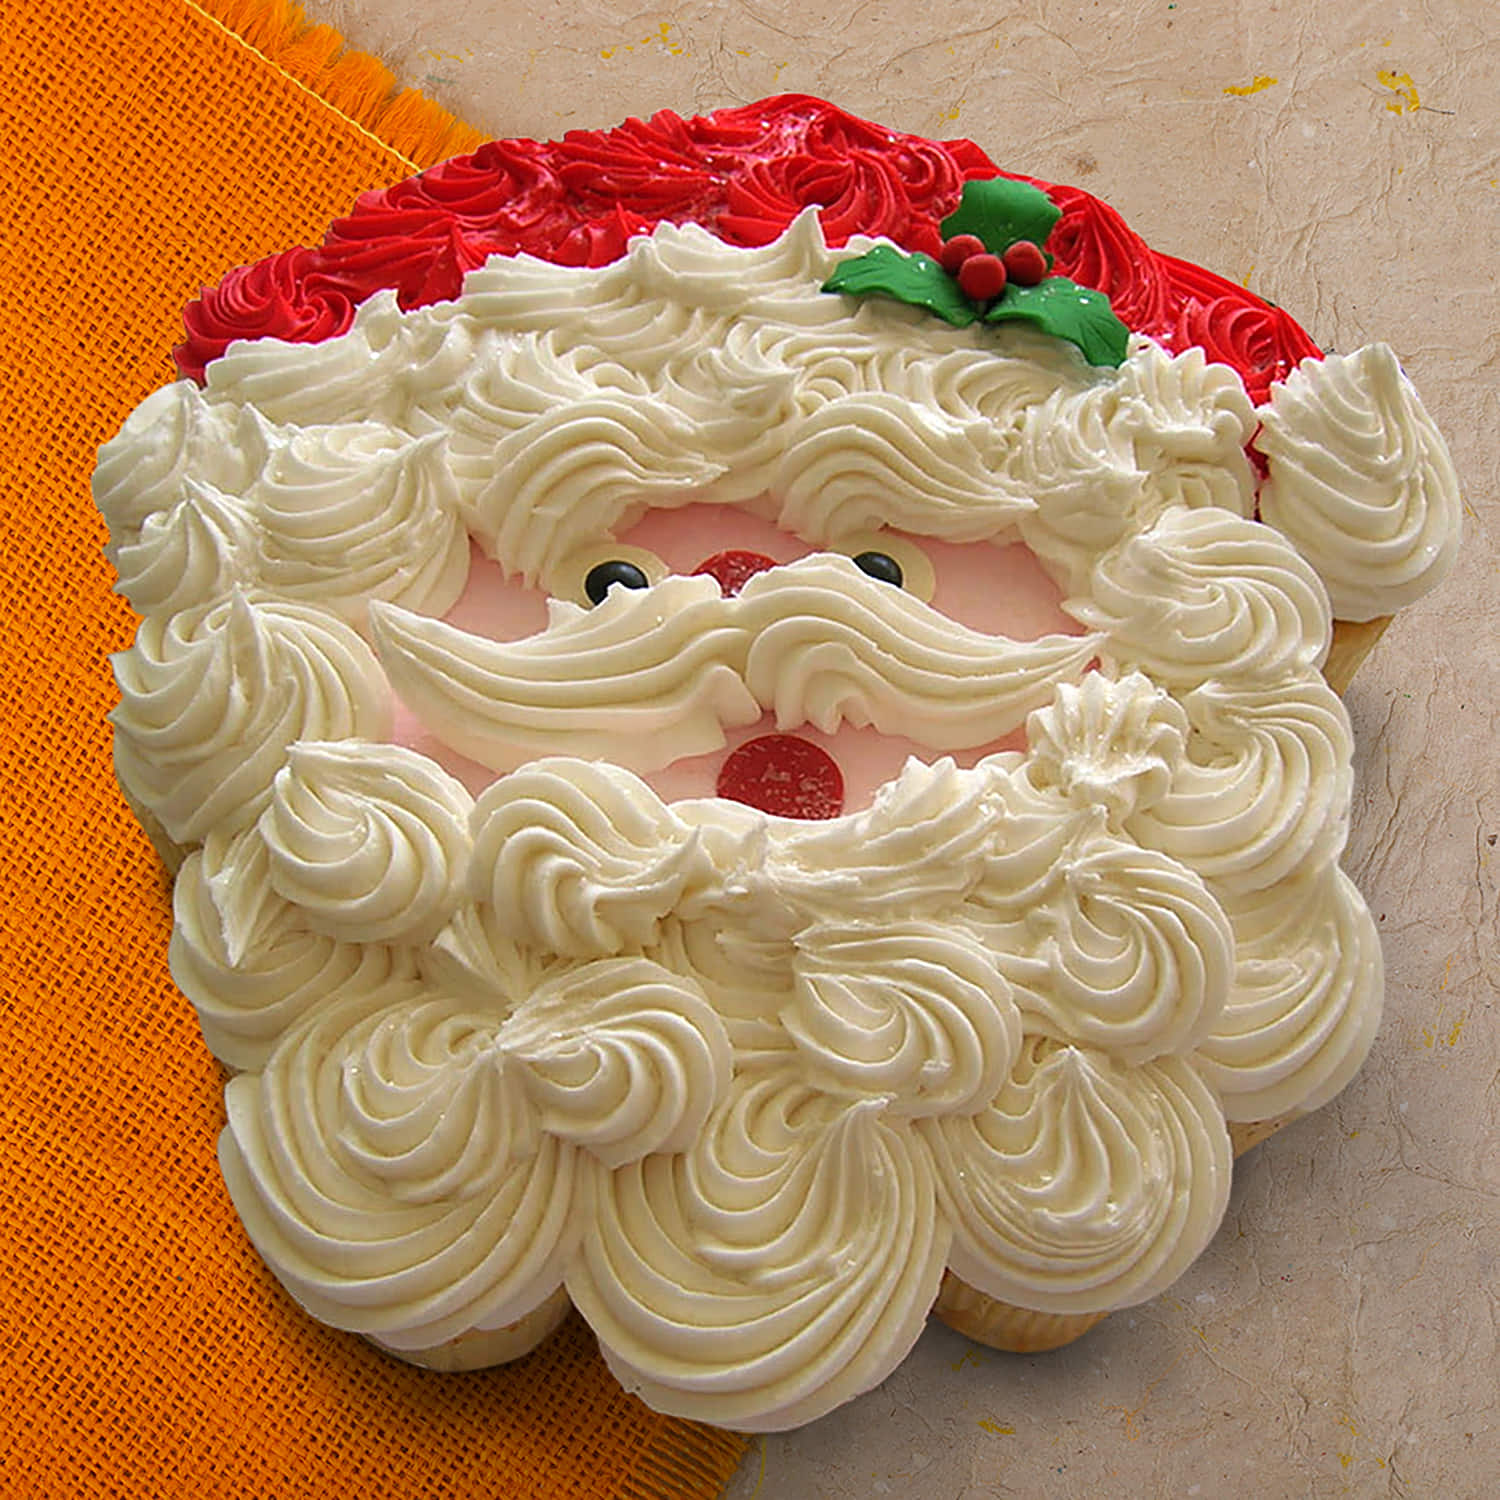 Santa face cake. | Bithday cake, Cake, Cake decorating